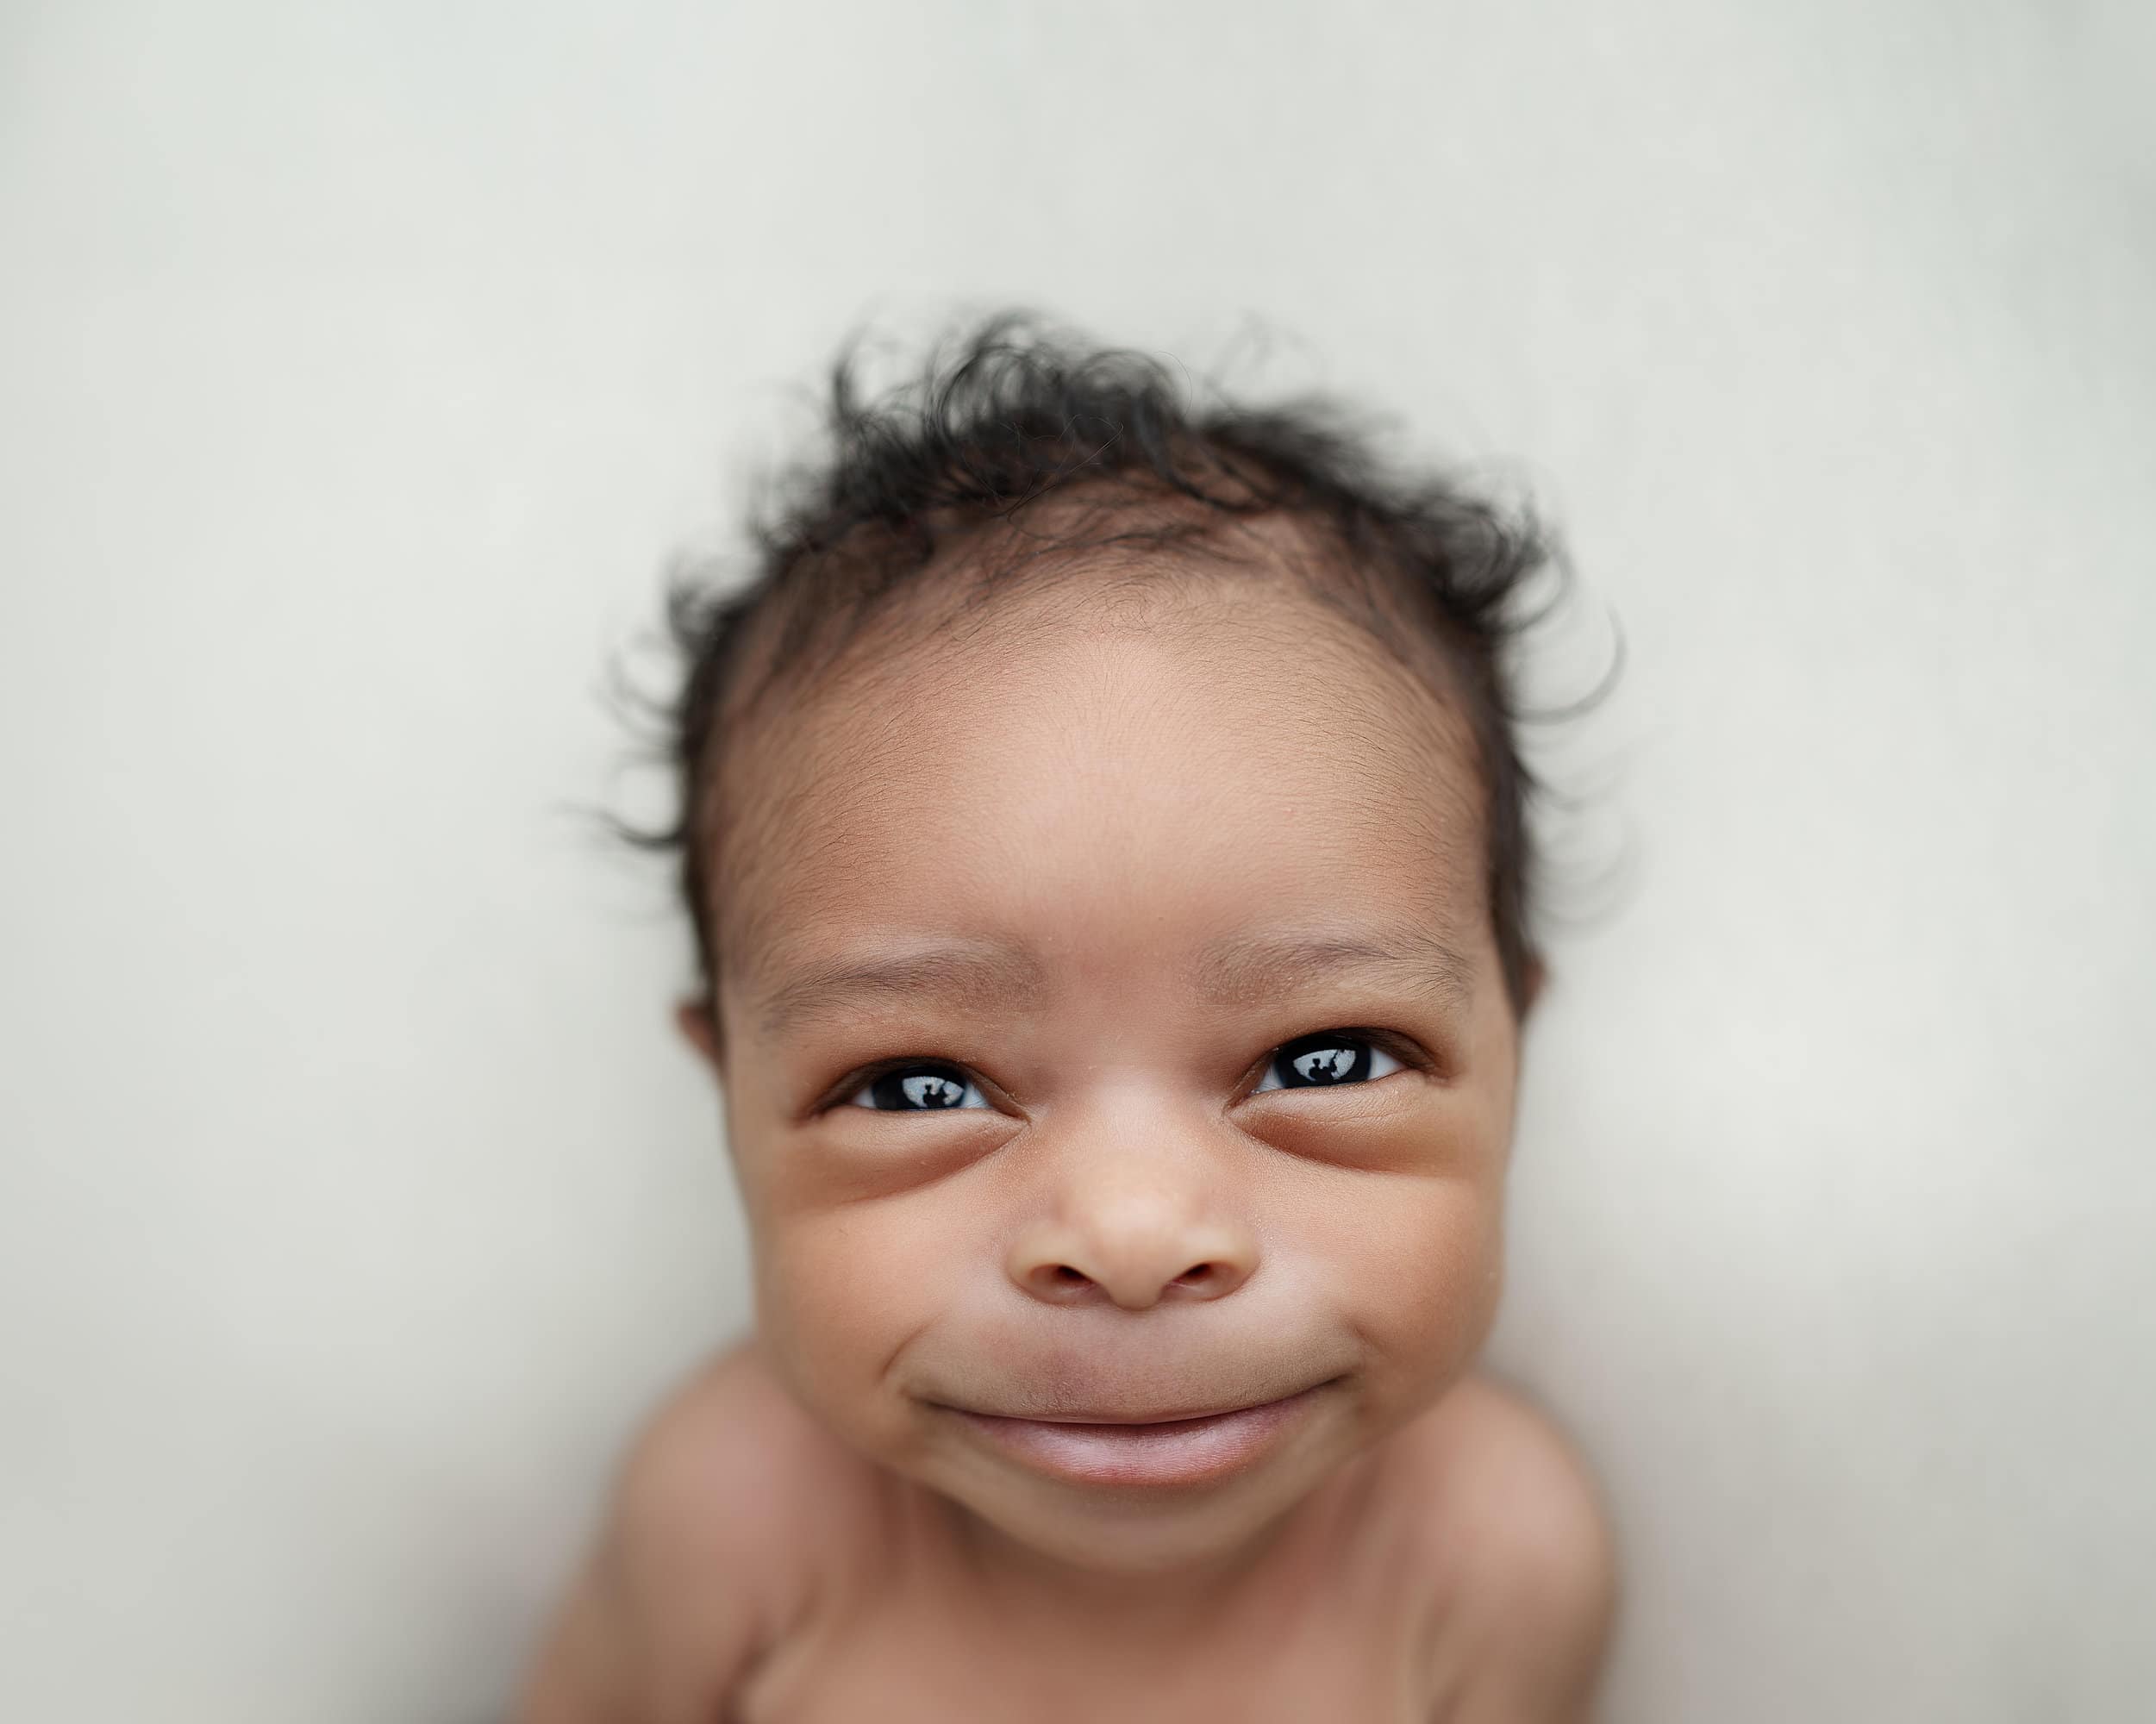 Smiling Newborn Baby Photography Birmingham Tianna J-Williams Photography